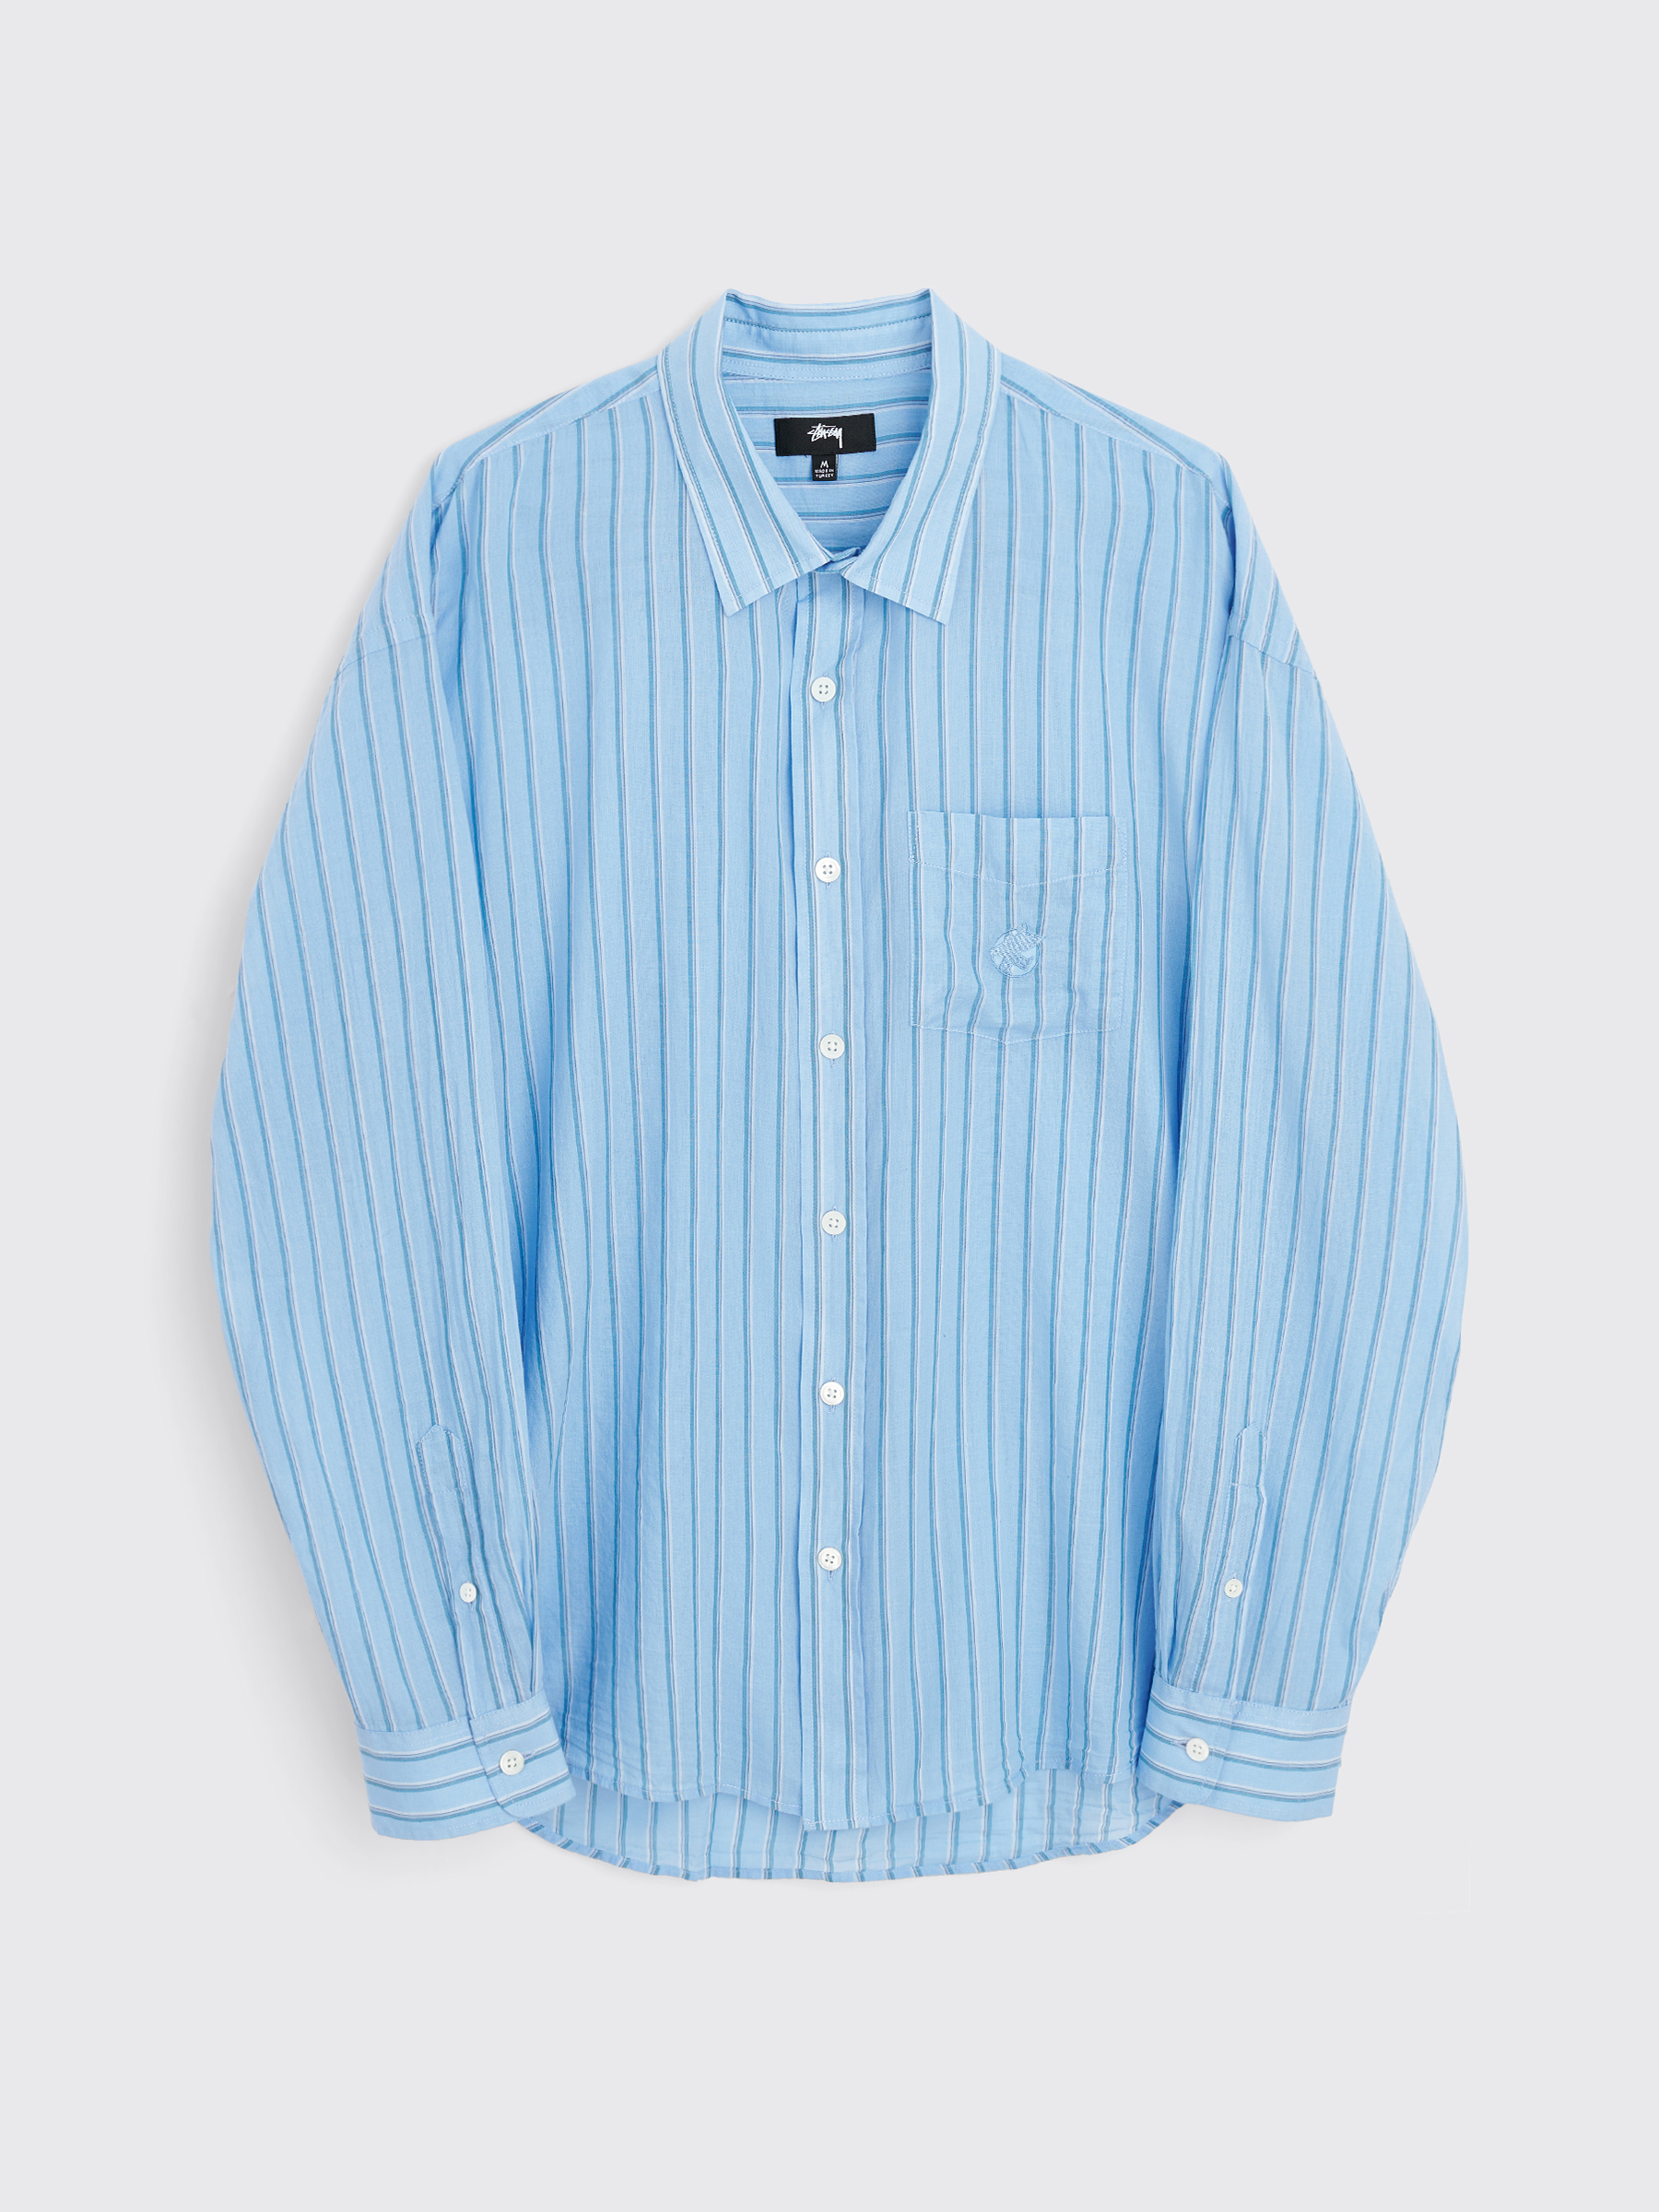 Très Bien - Stüssy Light Weight Classic Shirt Stripe Blue